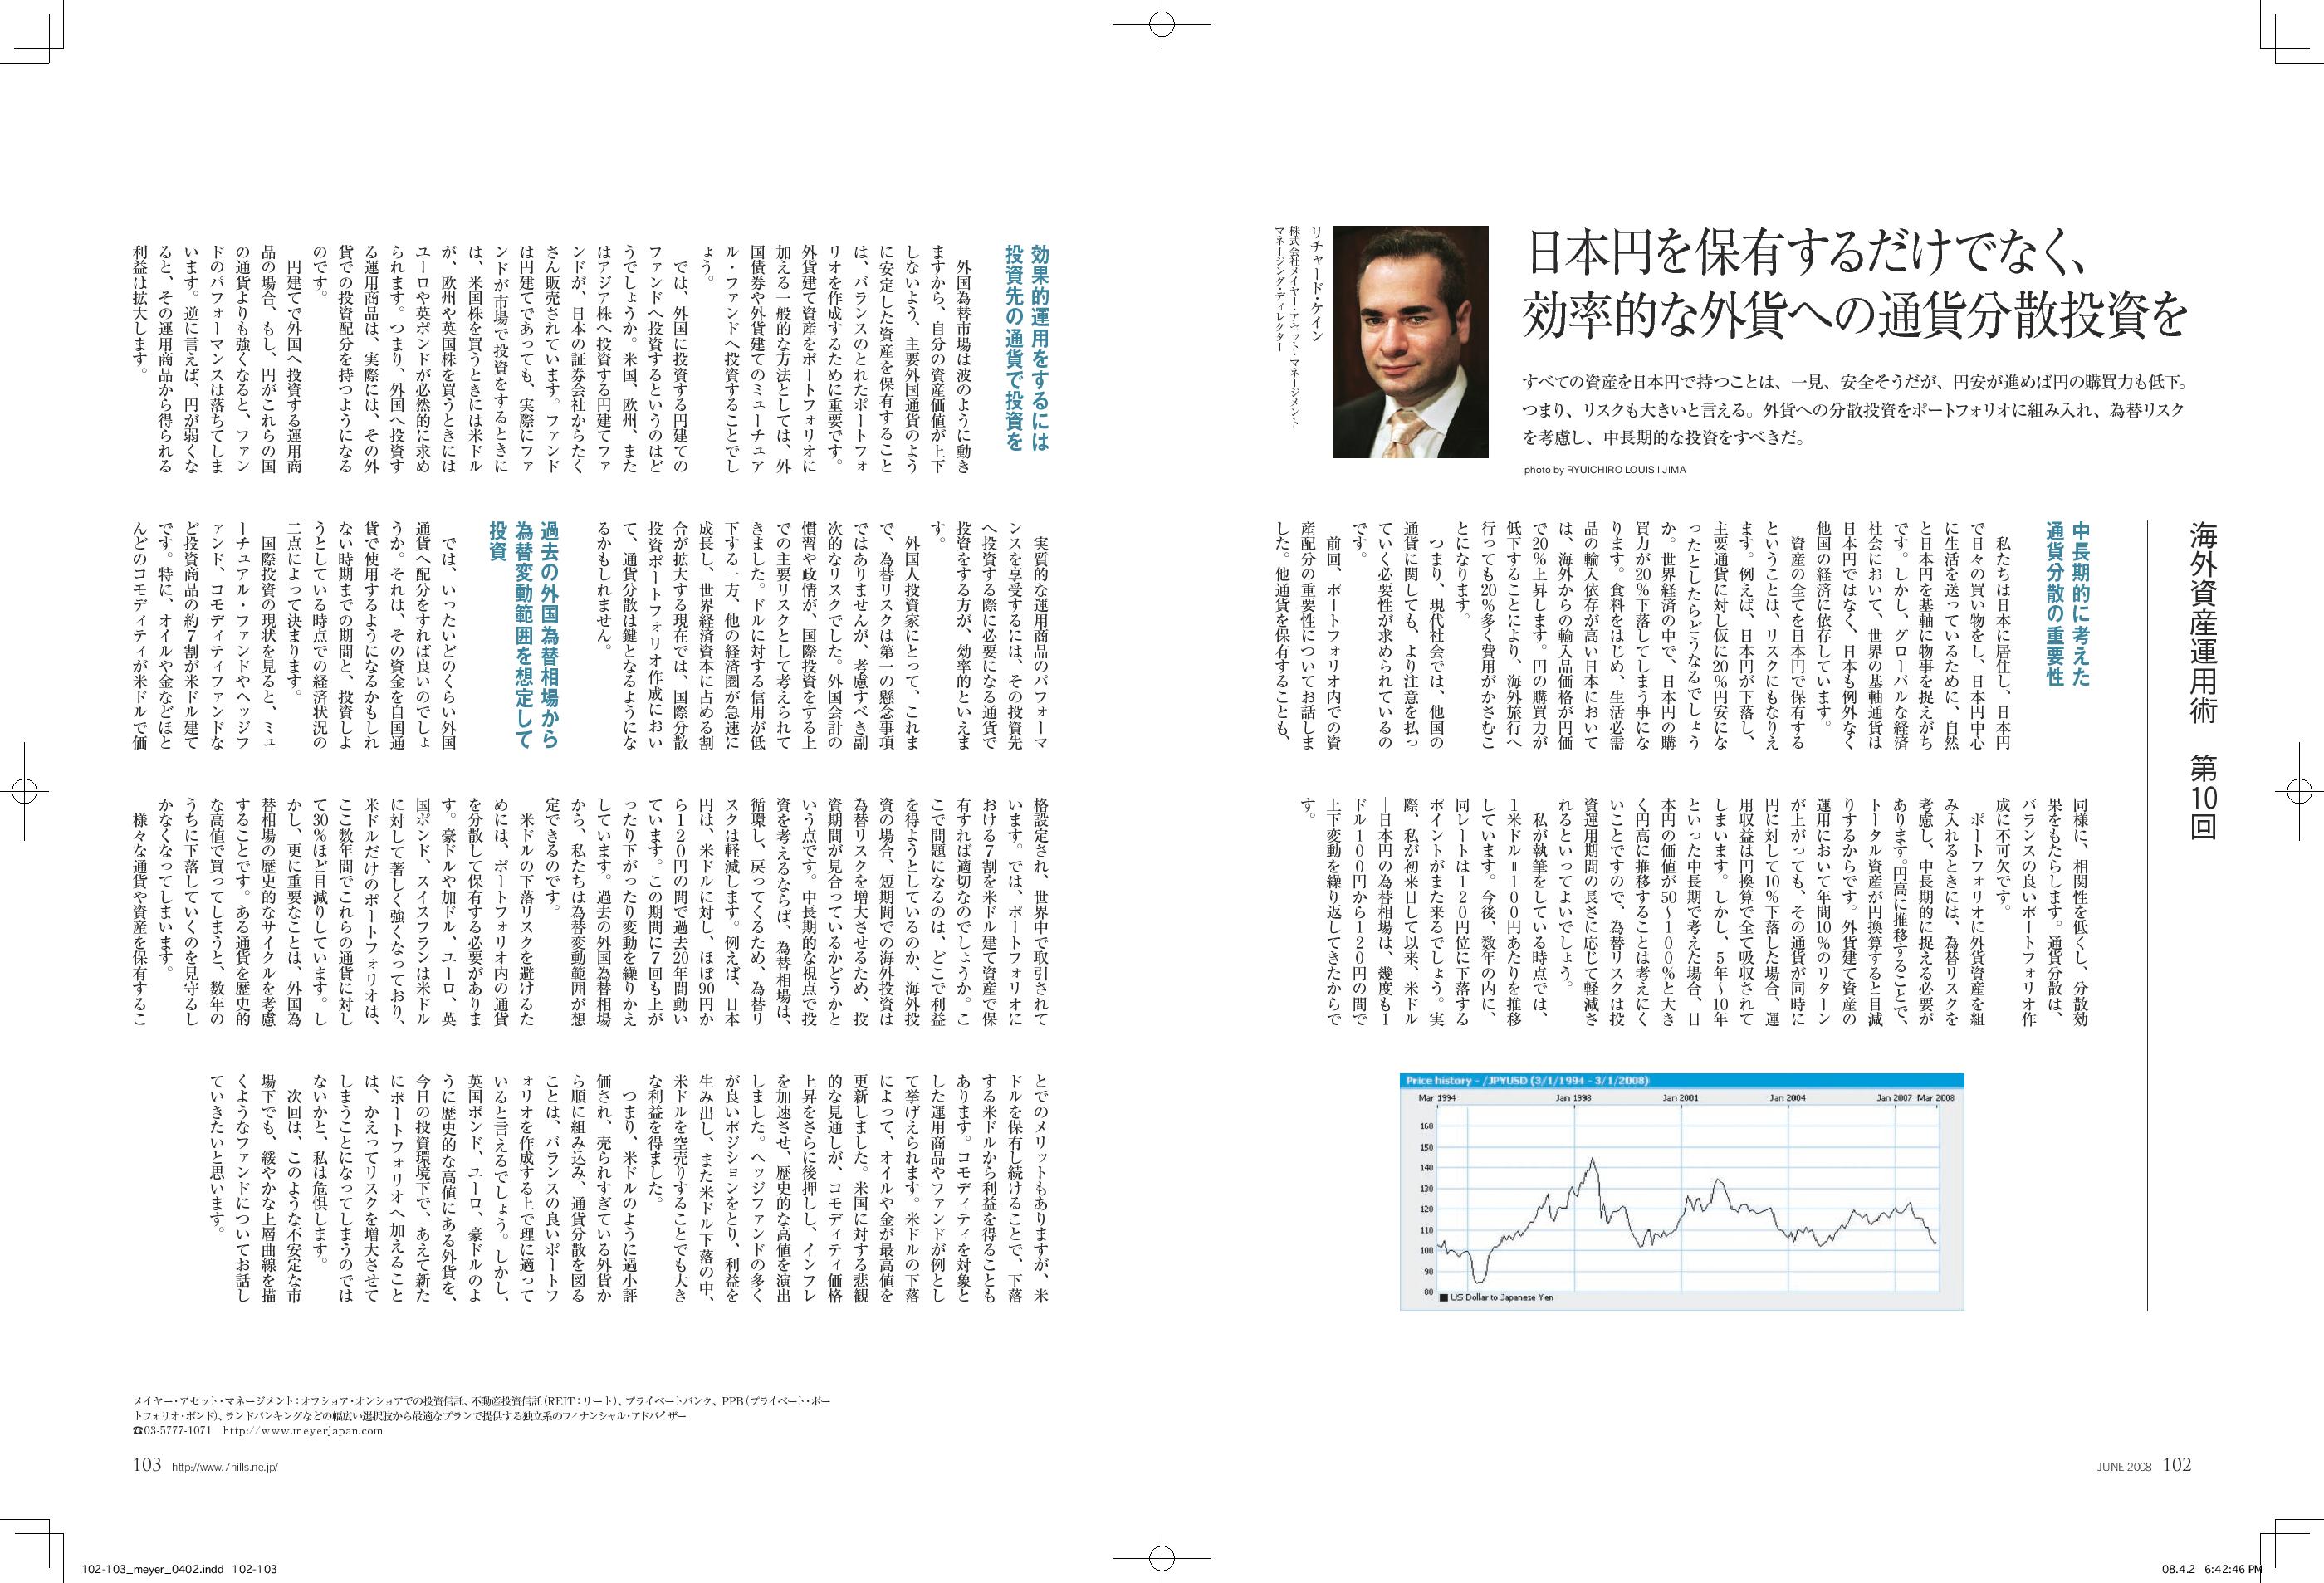 RICHARD CAYNE featured Seven Hills Japan on Japanese Yen exchange rate